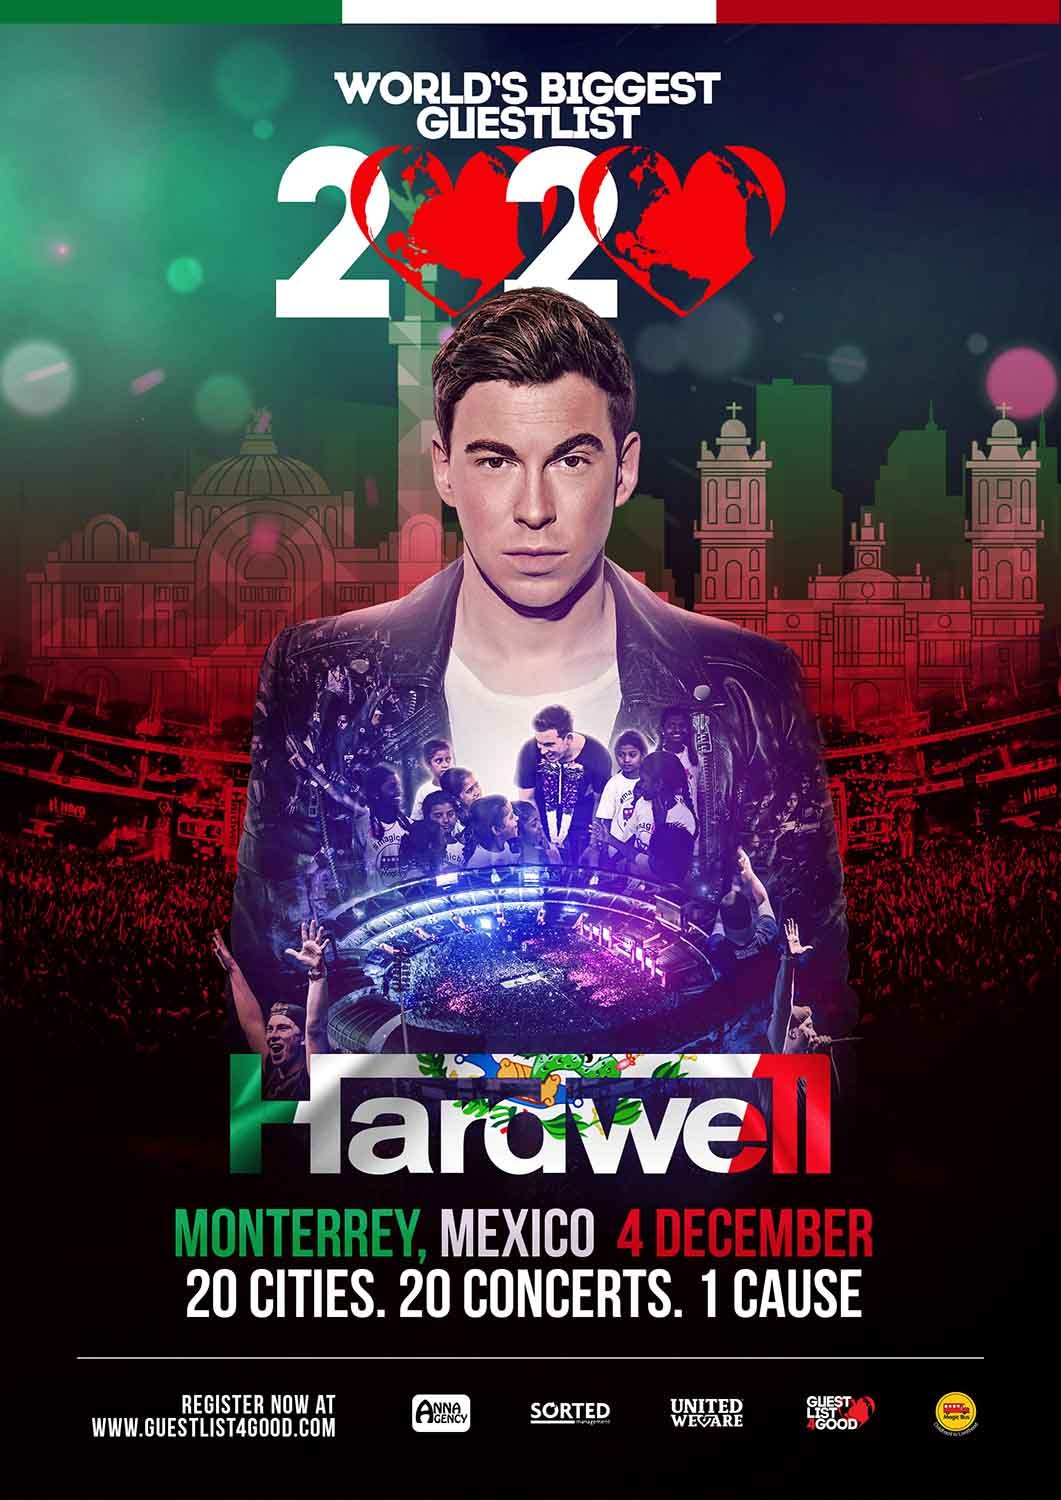 WBGF2020 featuring Hardwell, Monterrey, Mexico